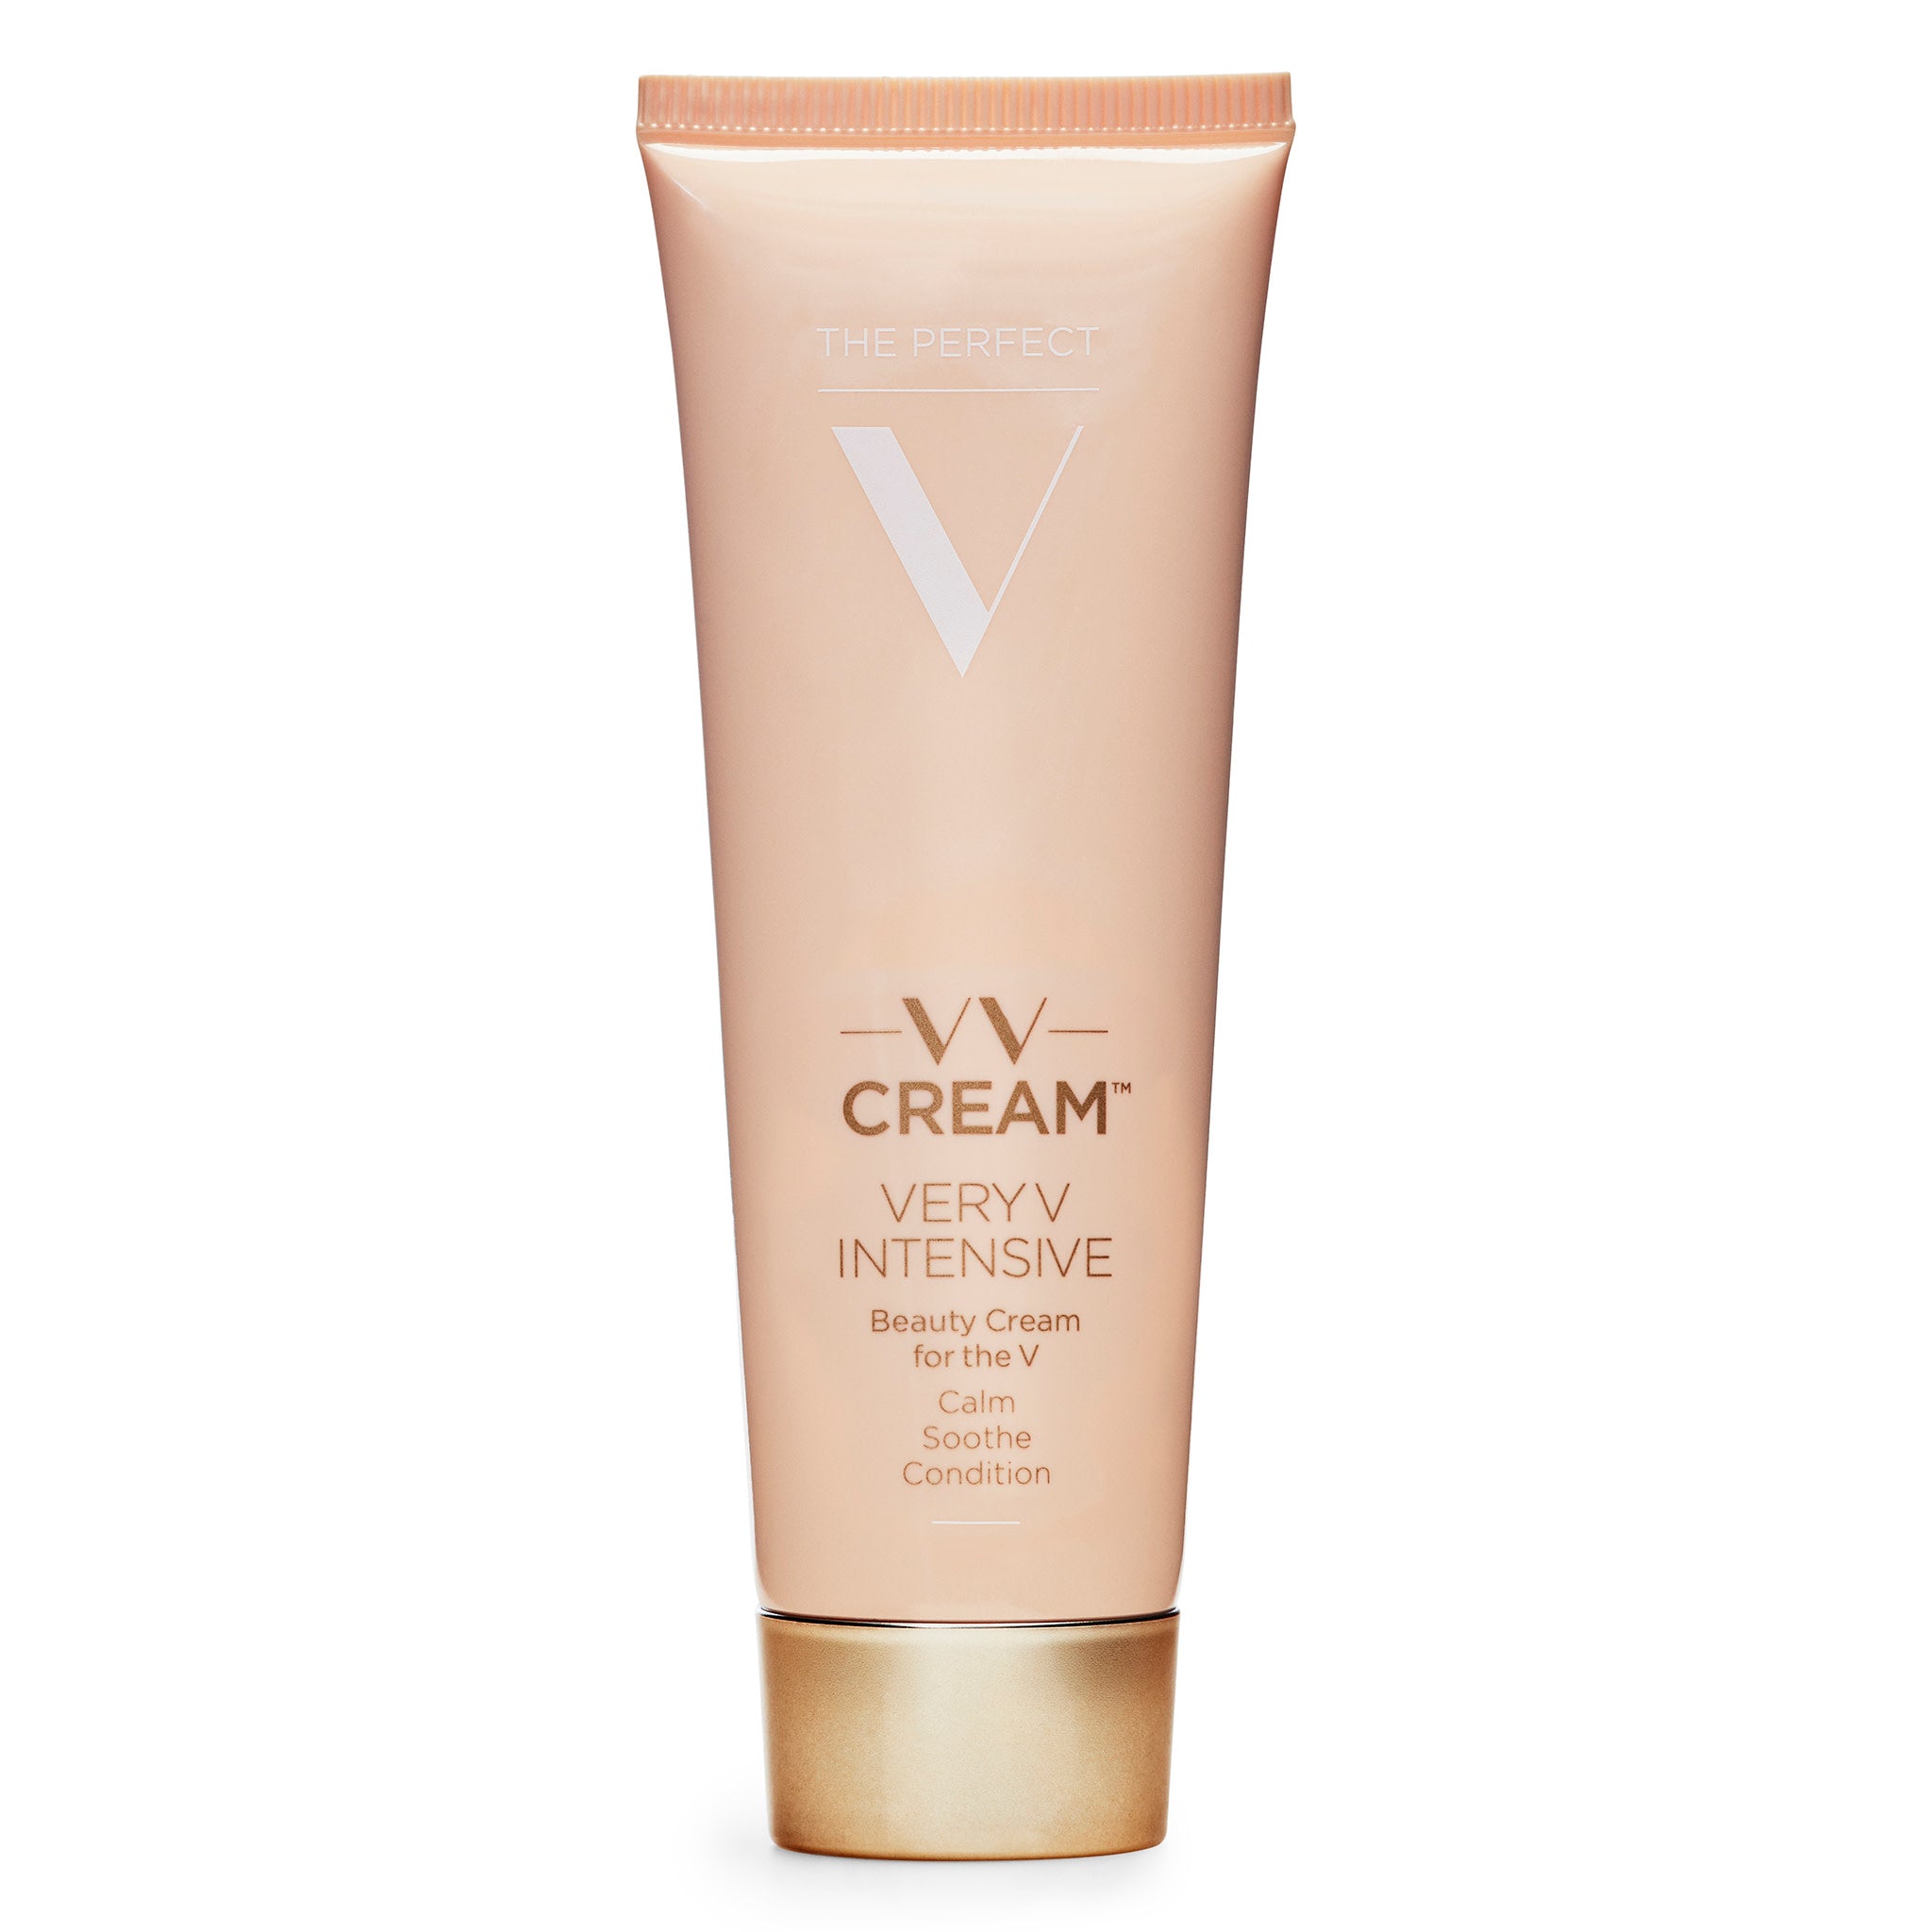 The Perfect V VV Cream Intensive main image.